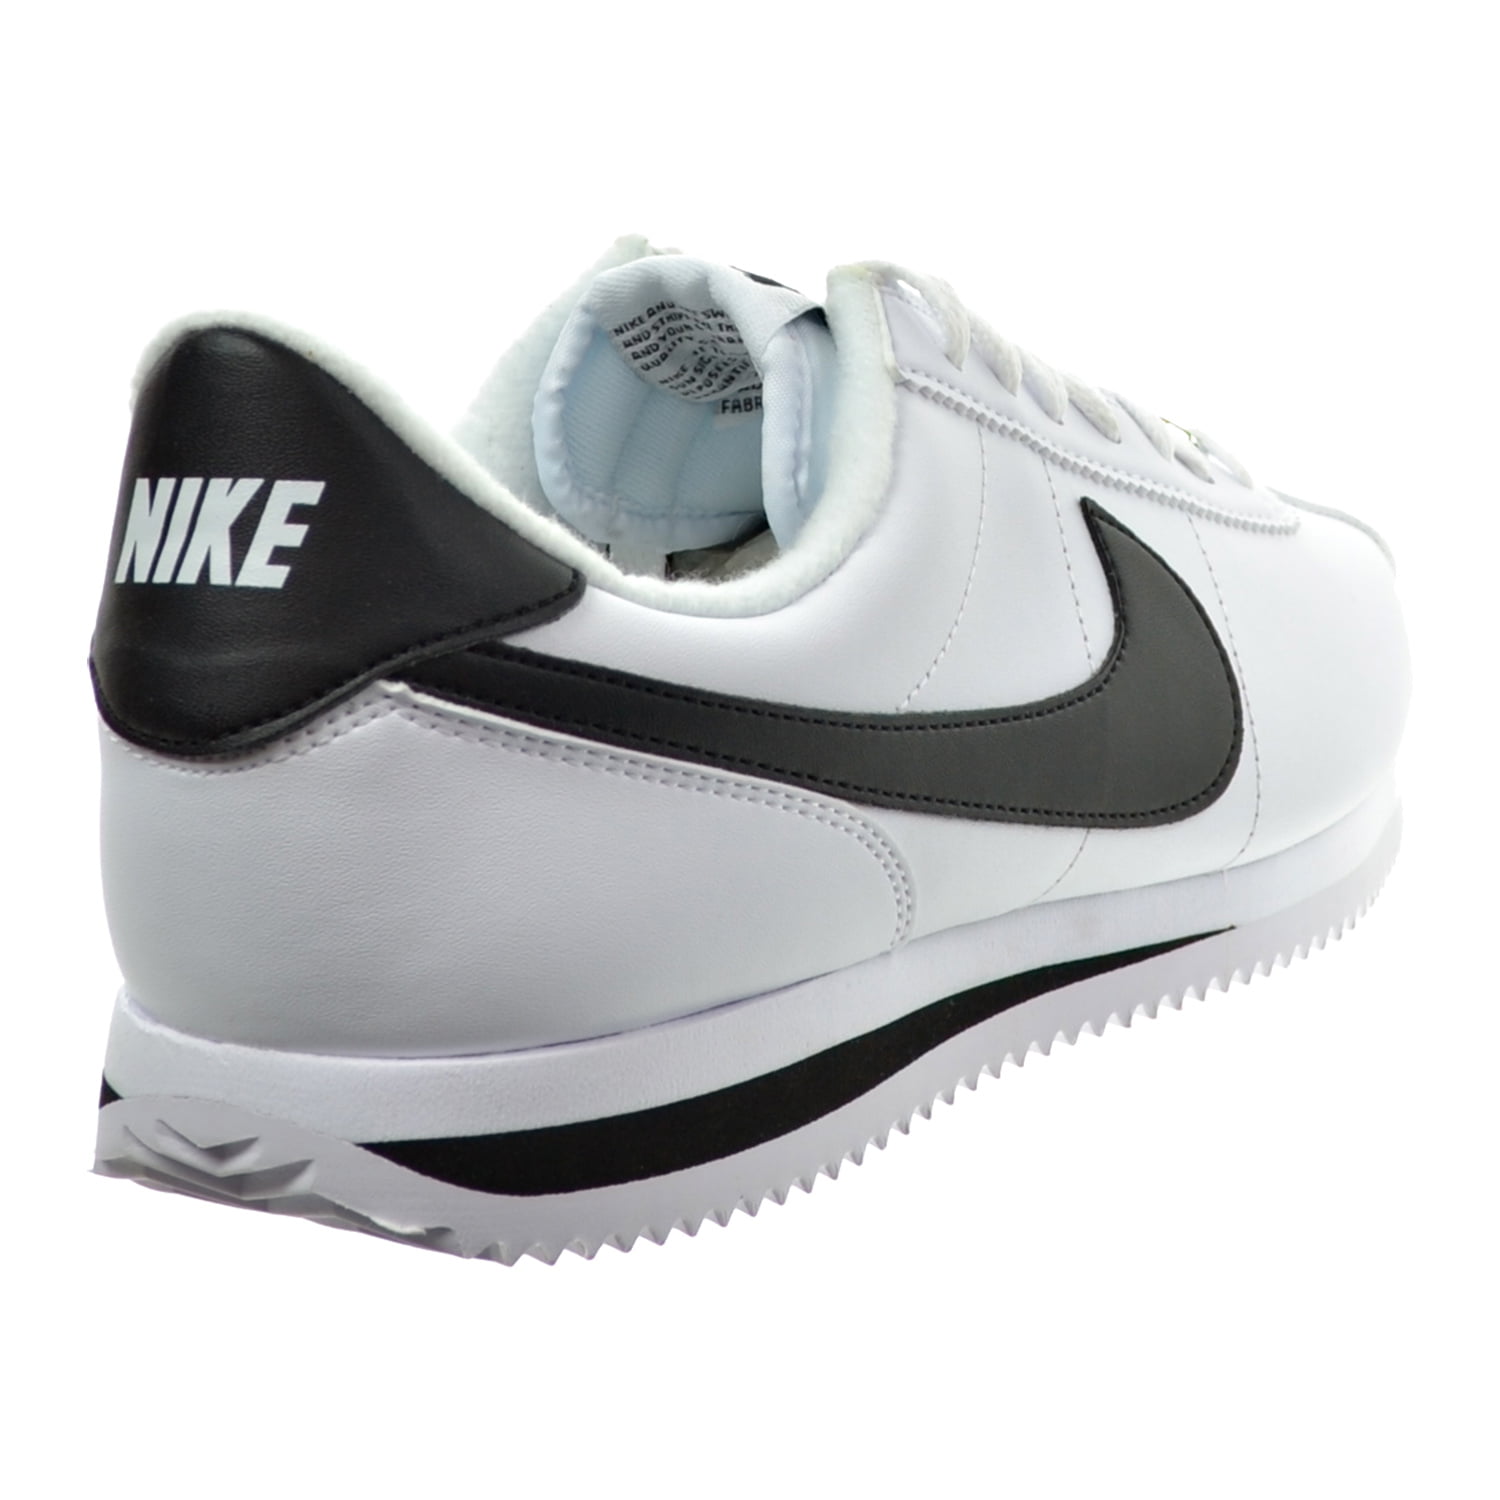 Nike Men Cortez Basic Leather Black White-Metallic Silver Size 7.0 US